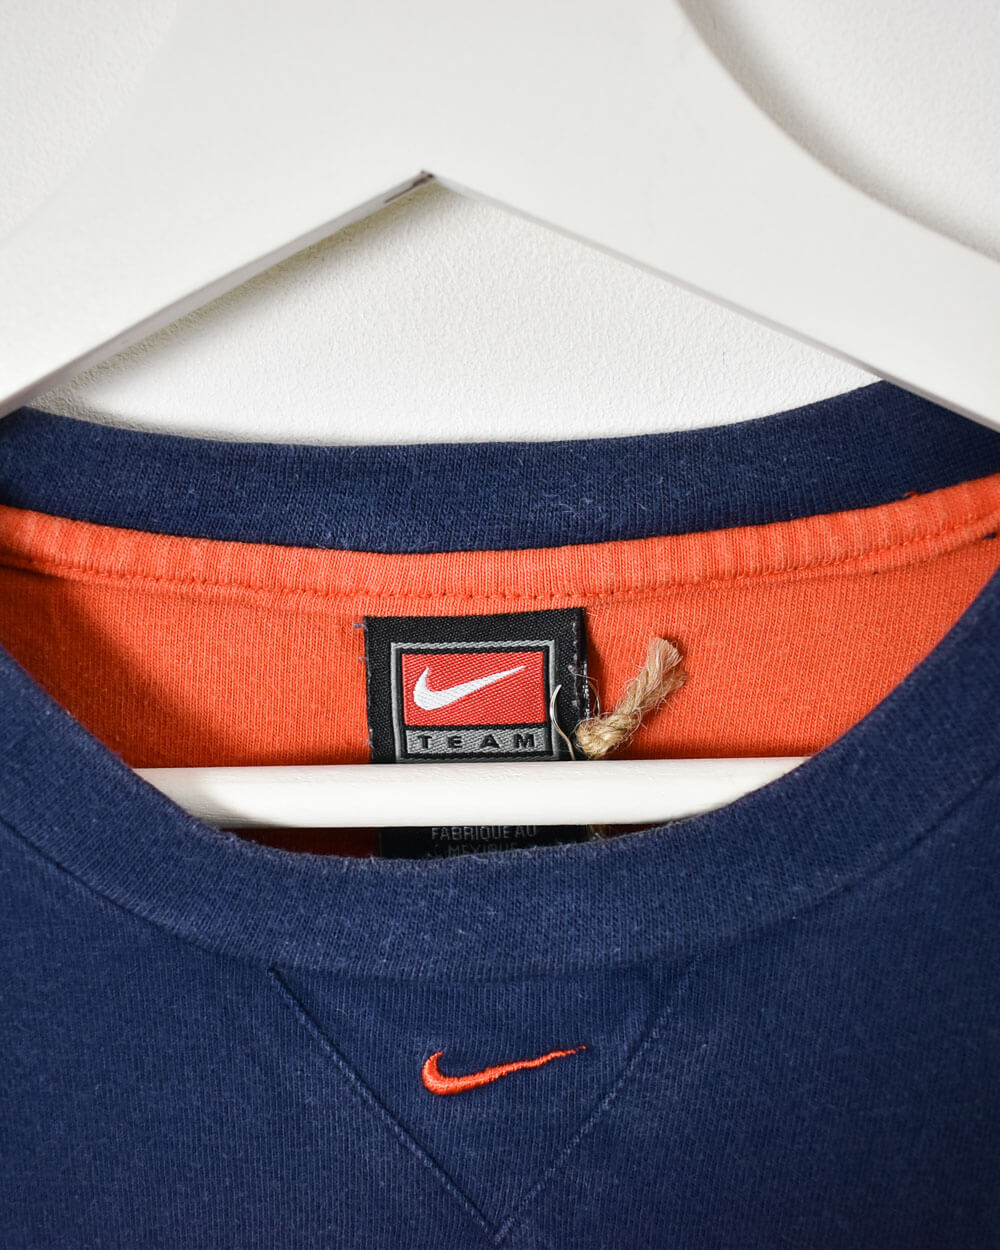 Navy Nike Team Knicks T-Shirt - Large